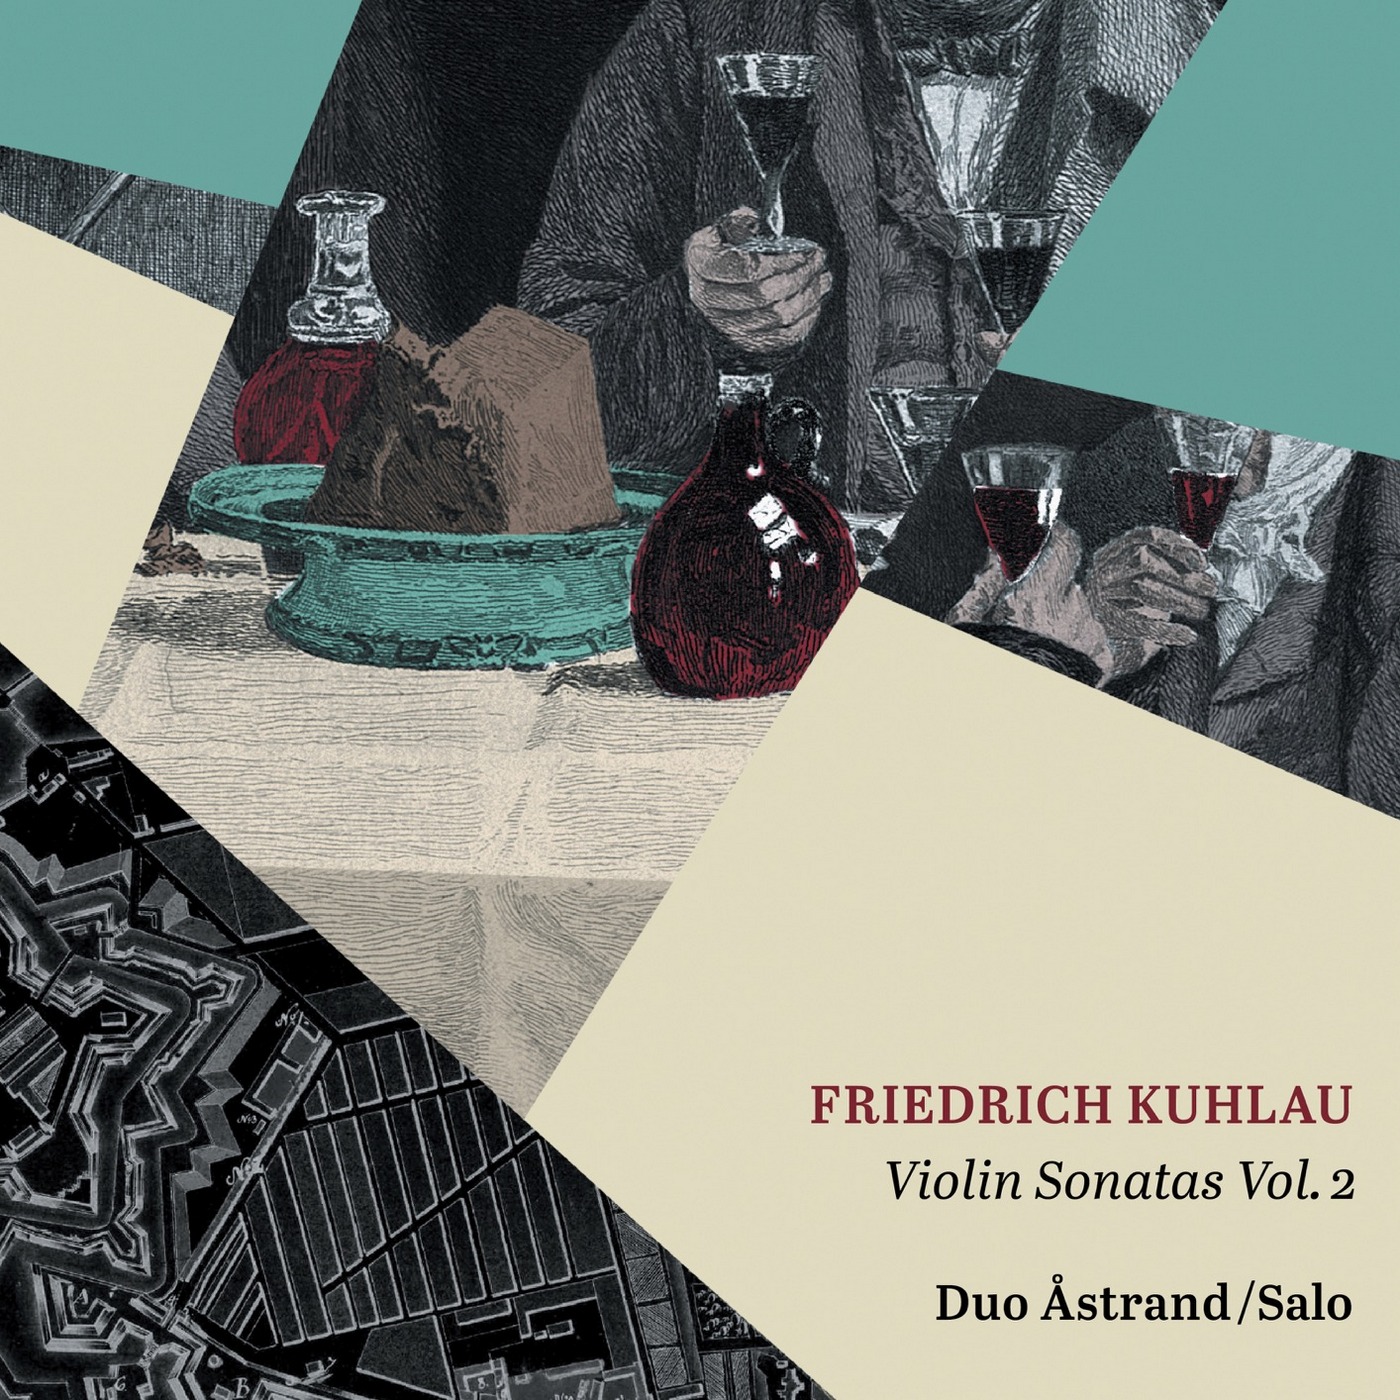 Duo Astrand,Salo, Christina Astrand & Per Salo - Kuhlau: Violin Sonatas, Vol. 2 (2019) [FLAC 24bit/192kHz]